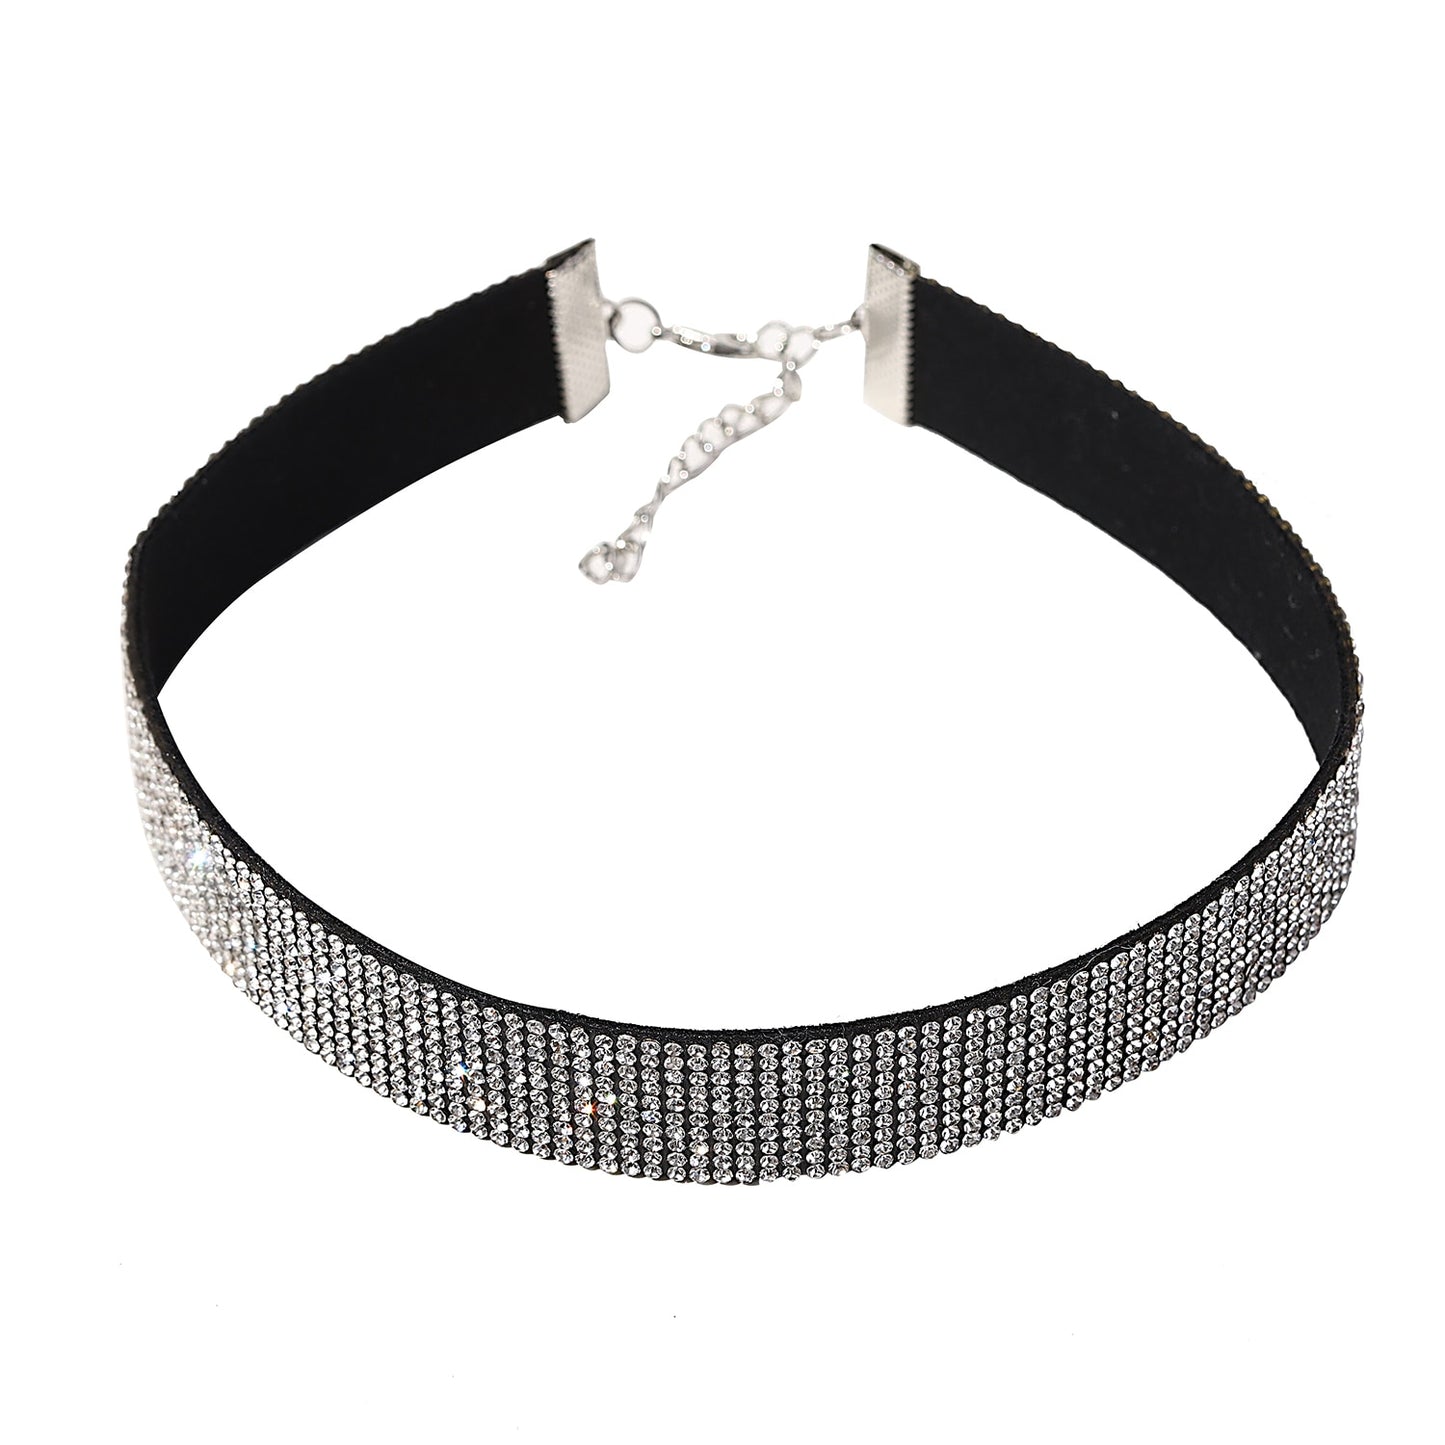 Fashion Shiny Crystal Rhinestone Choker Necklace for Women Black Chain Wedding Accessories Punk Gothic Chokers Jewelry